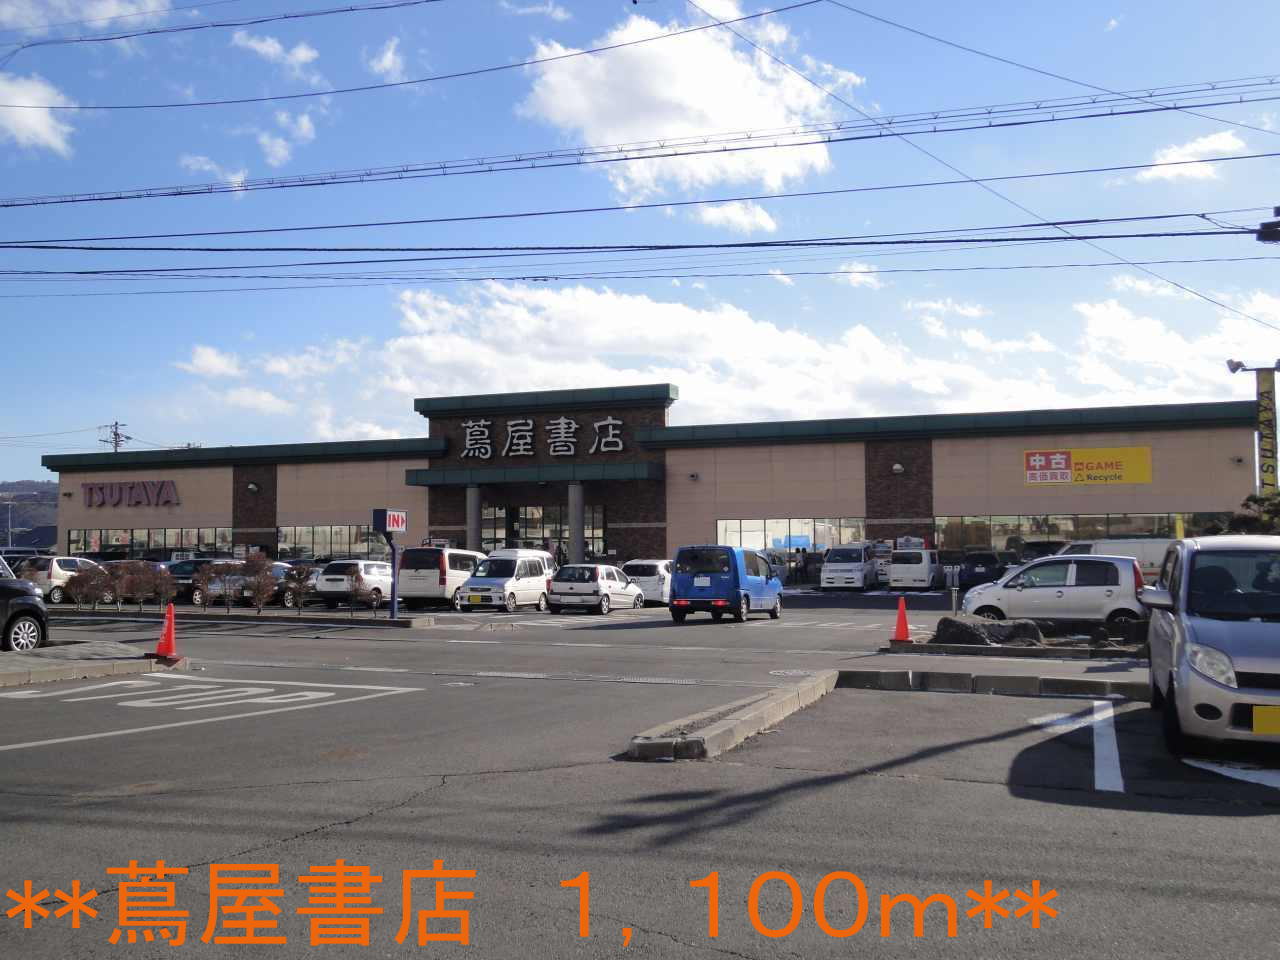 Rental video. Tsutaya bookstore Ueda Oya shop 1100m up (video rental)